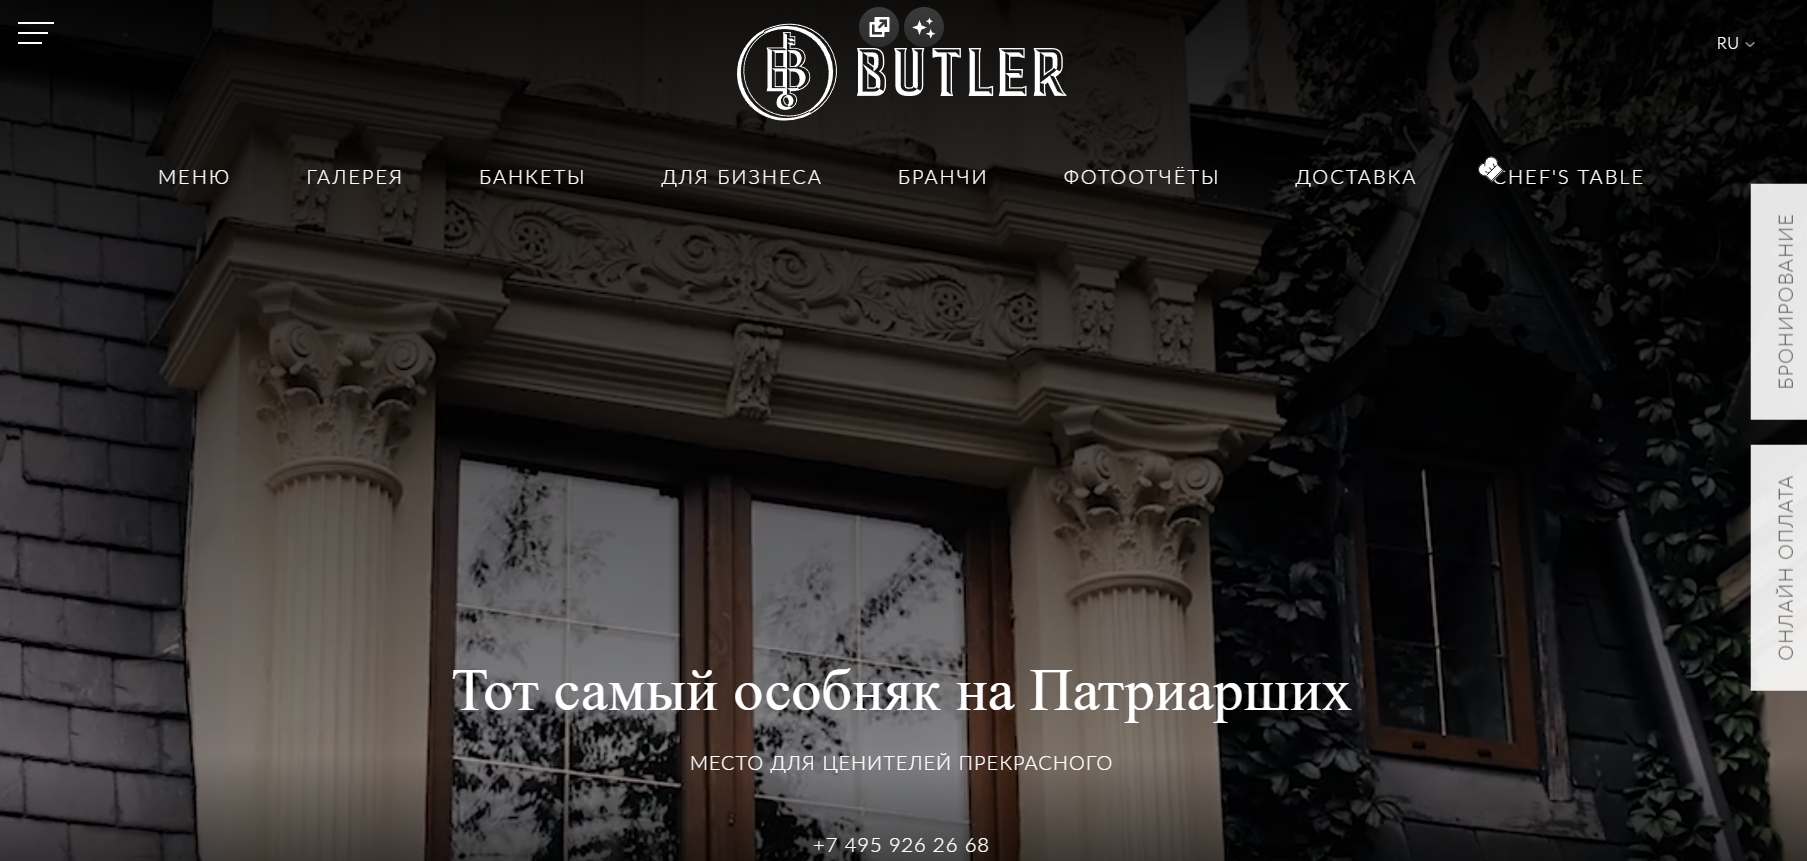 Ресторан Butler отзывы